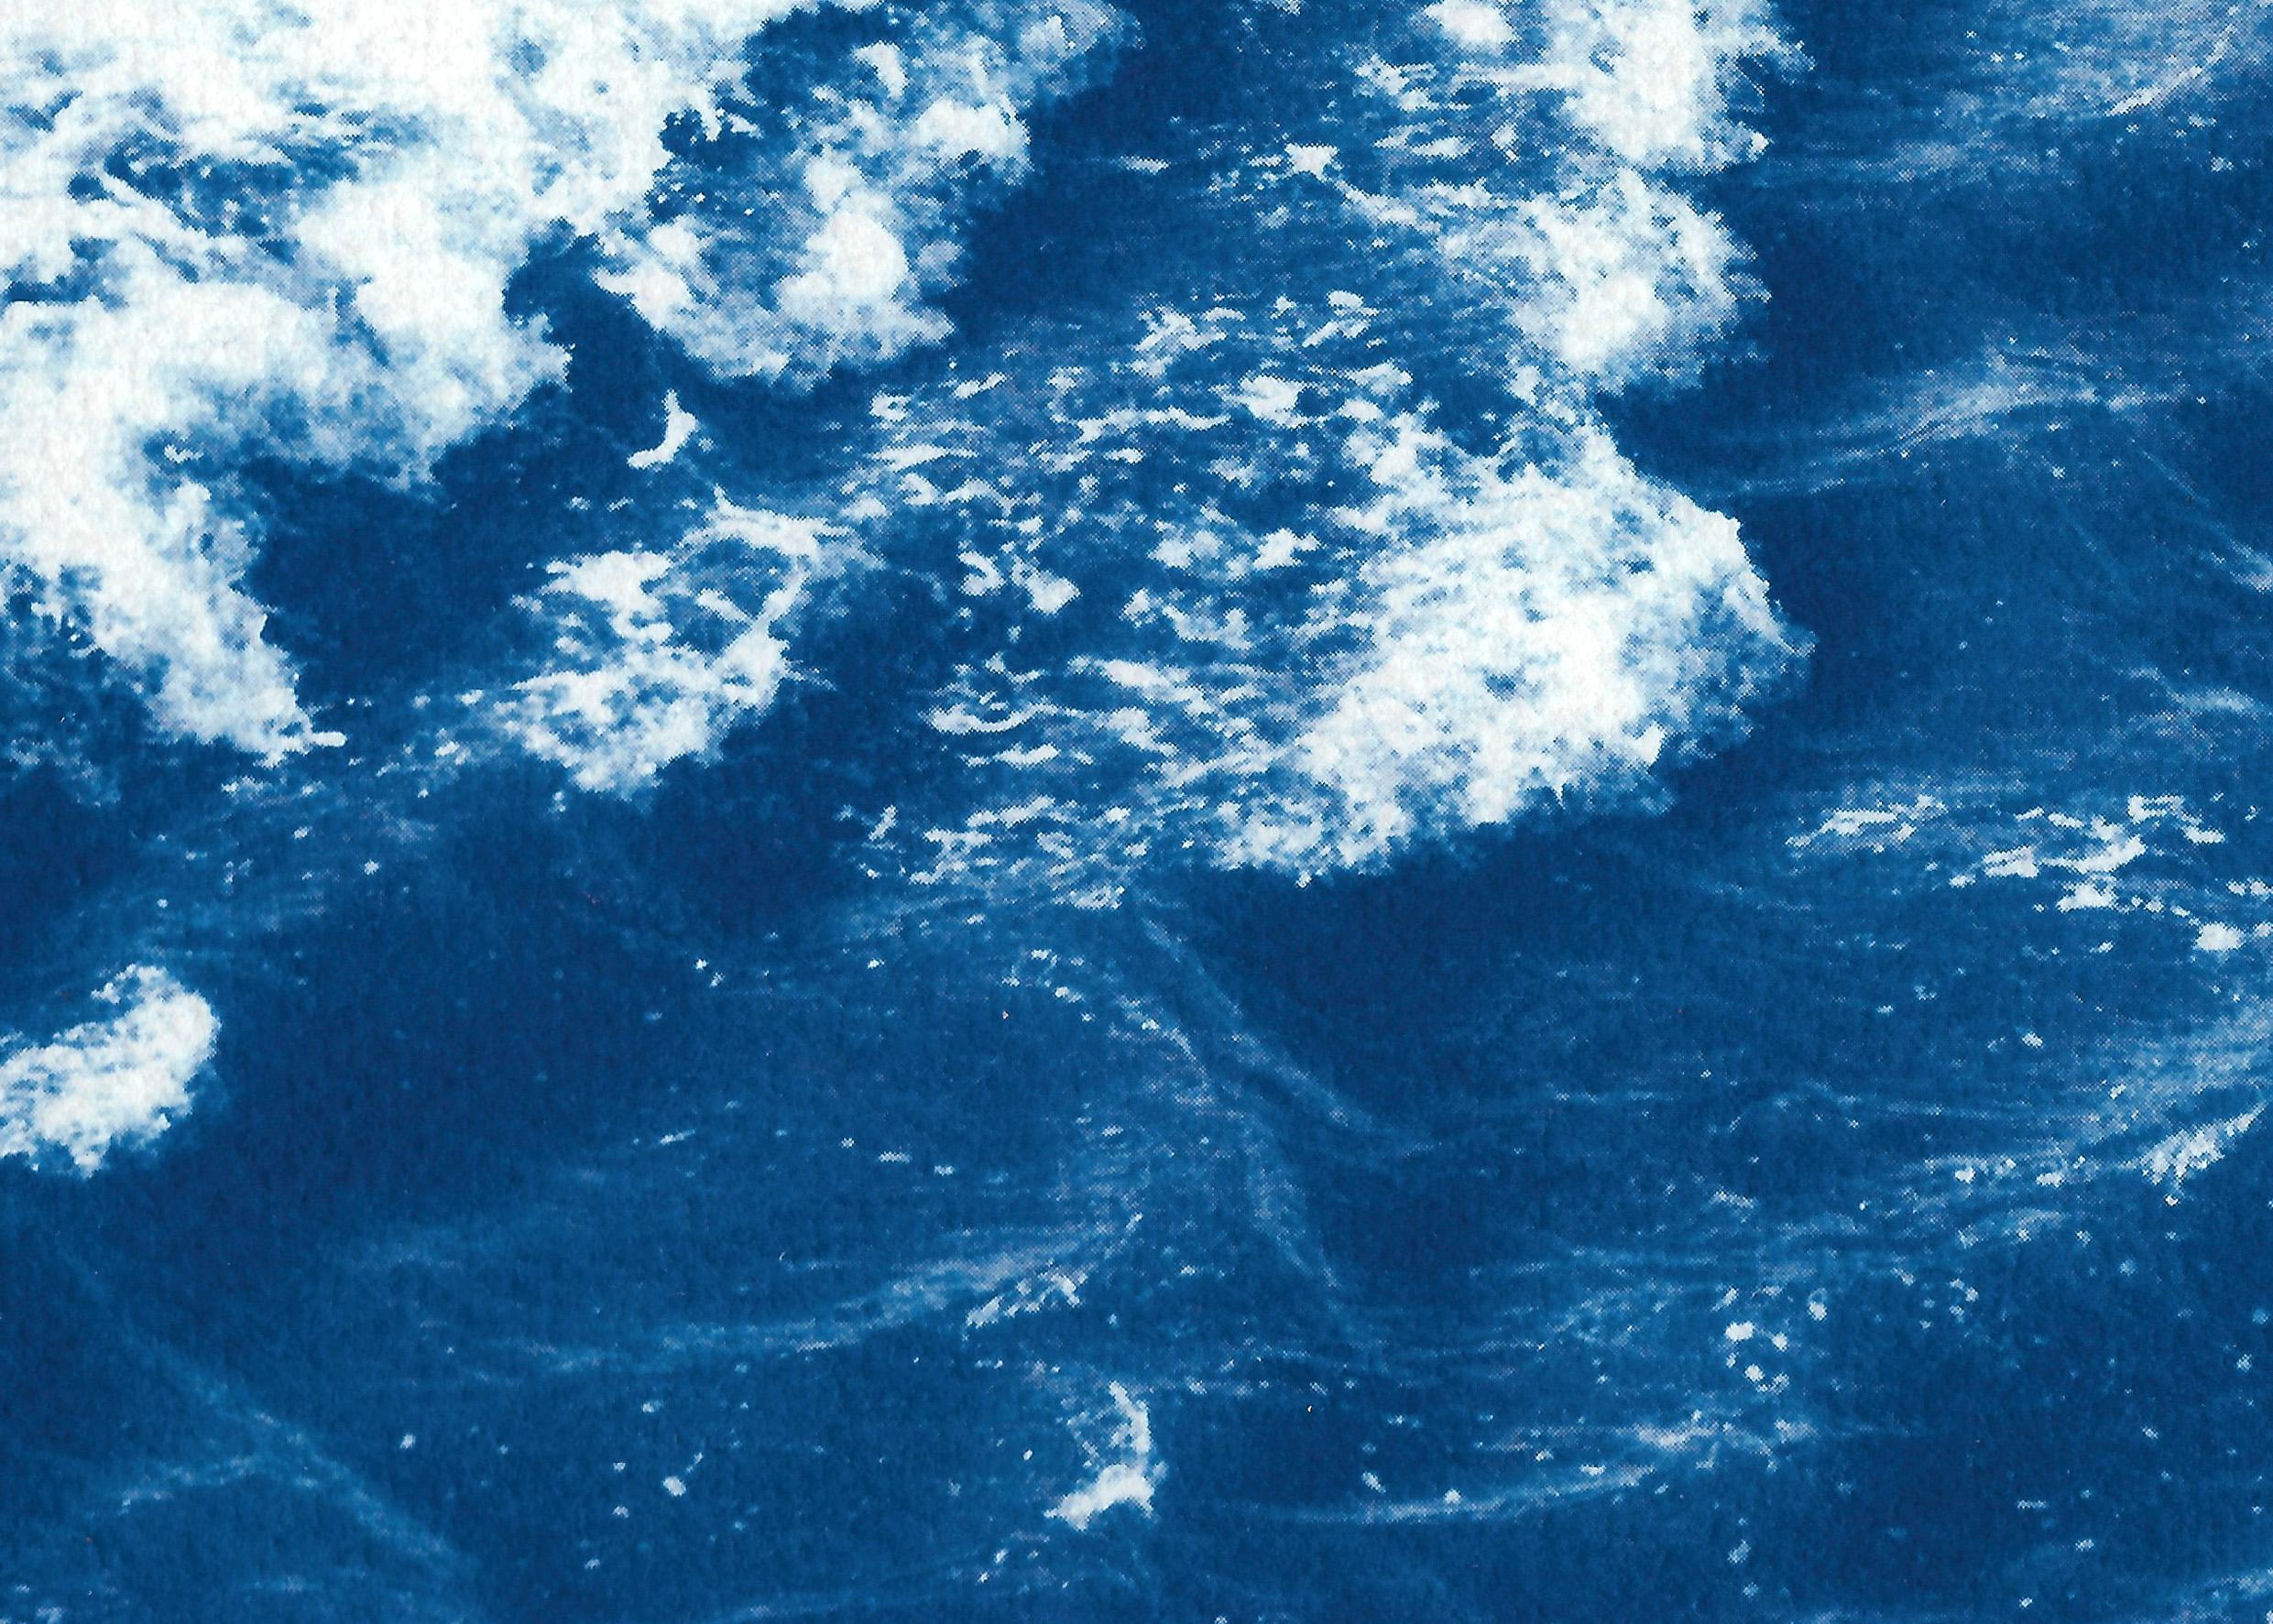 Rolling Waves off Sidney, Seascape Diptych Cyanotype, Australian Coast, Indigo 1